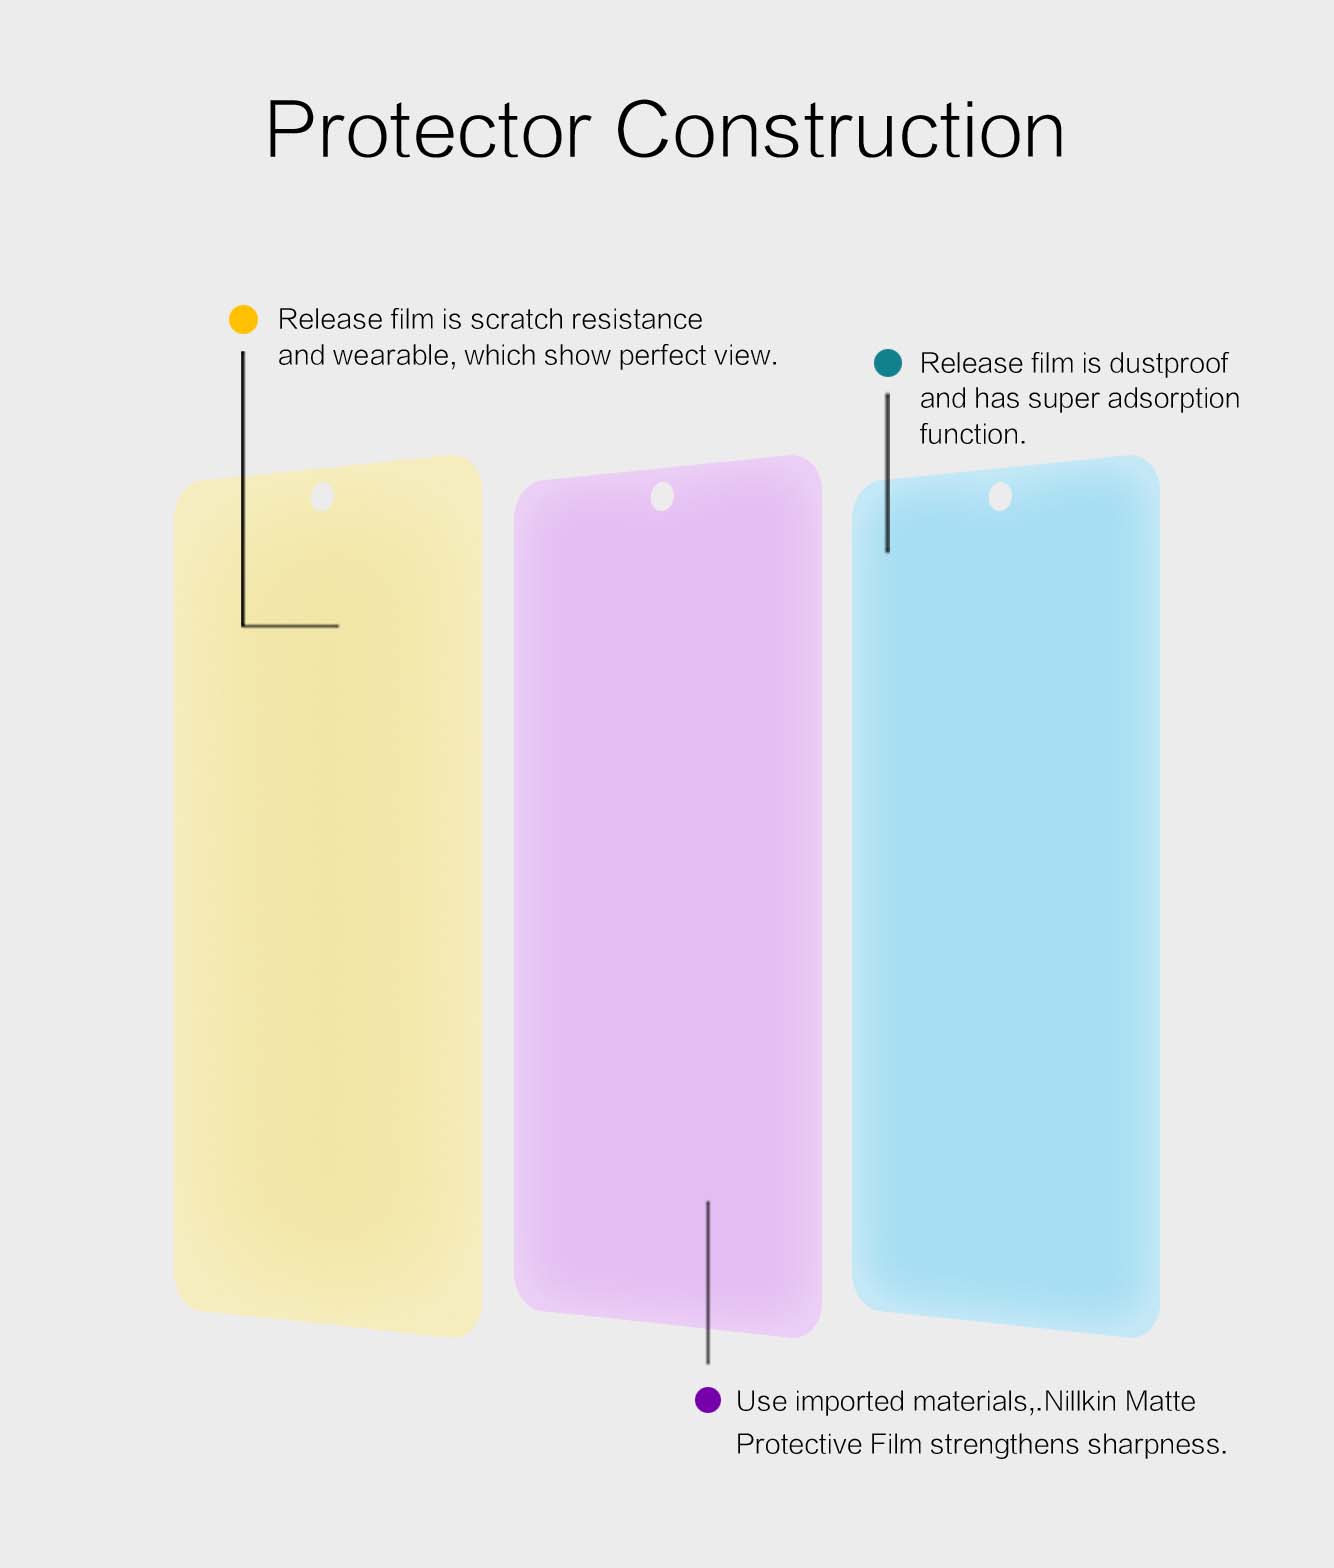 XIAOMI POCO X4 Pro 5G screen protector